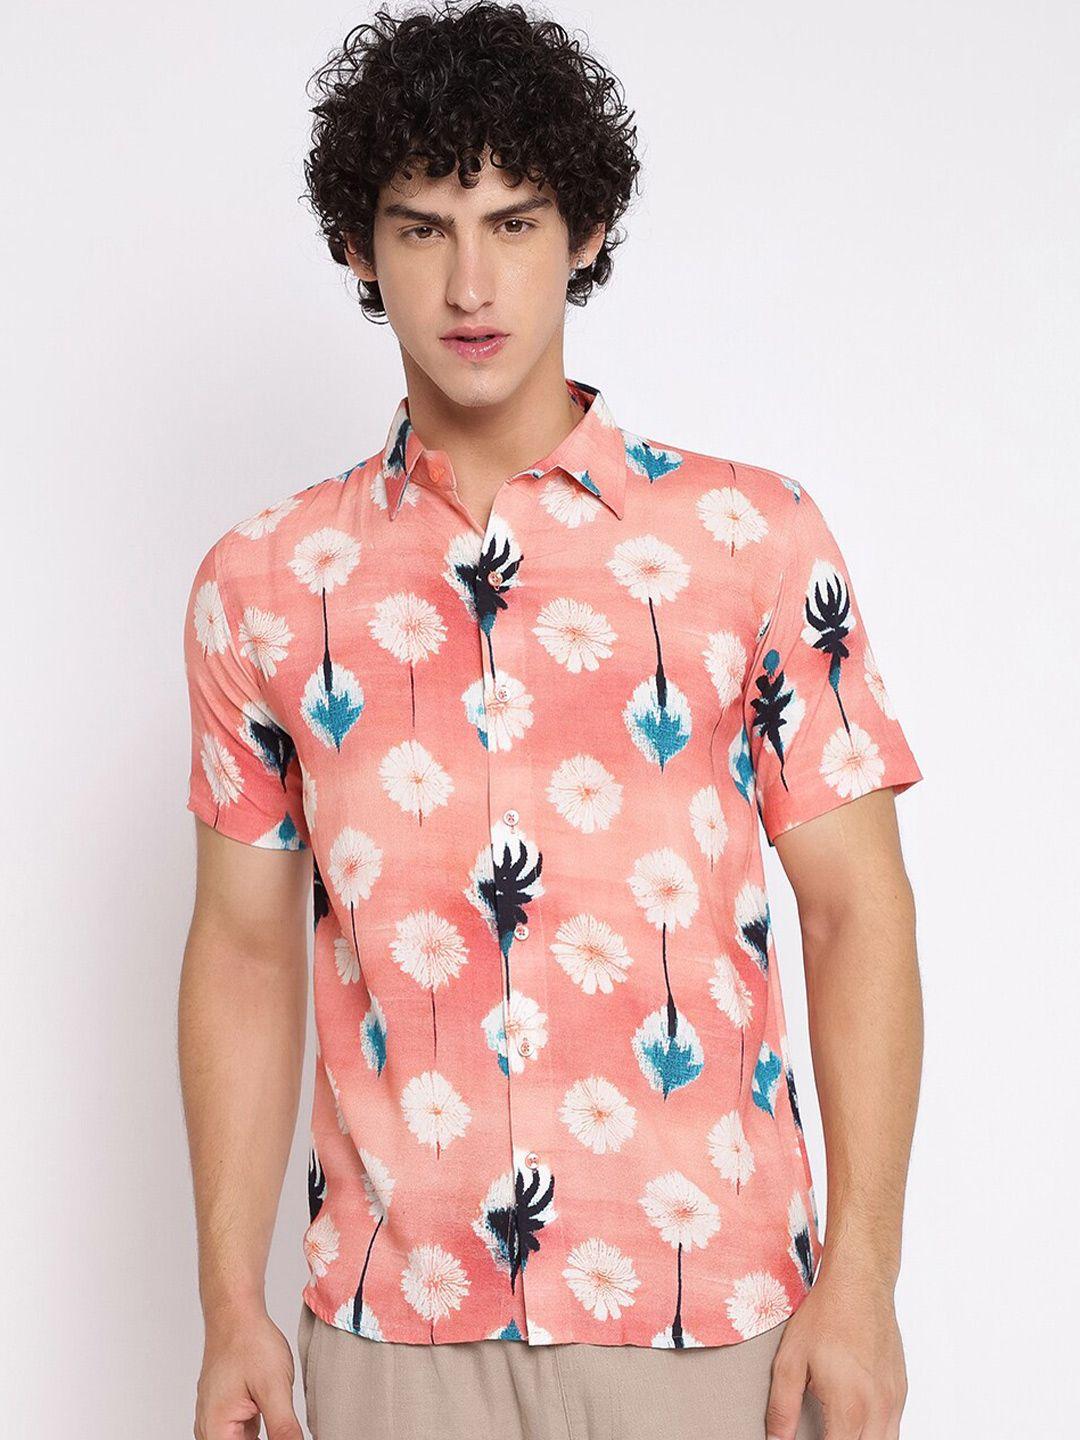 shurtz-n-skurtz-floral-printed-relaxed-fit-cotton-casual-shirt